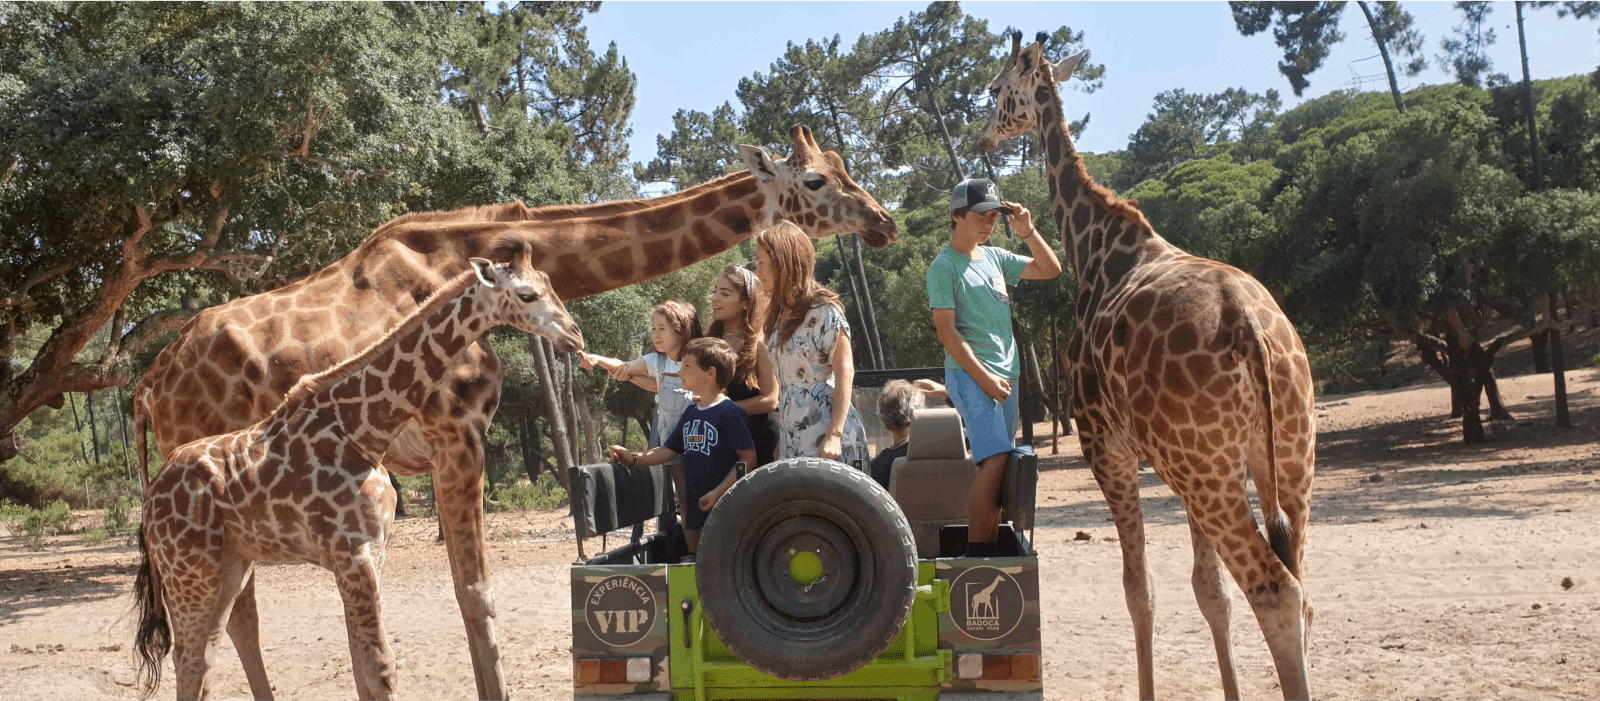 badoca safari park lisboa